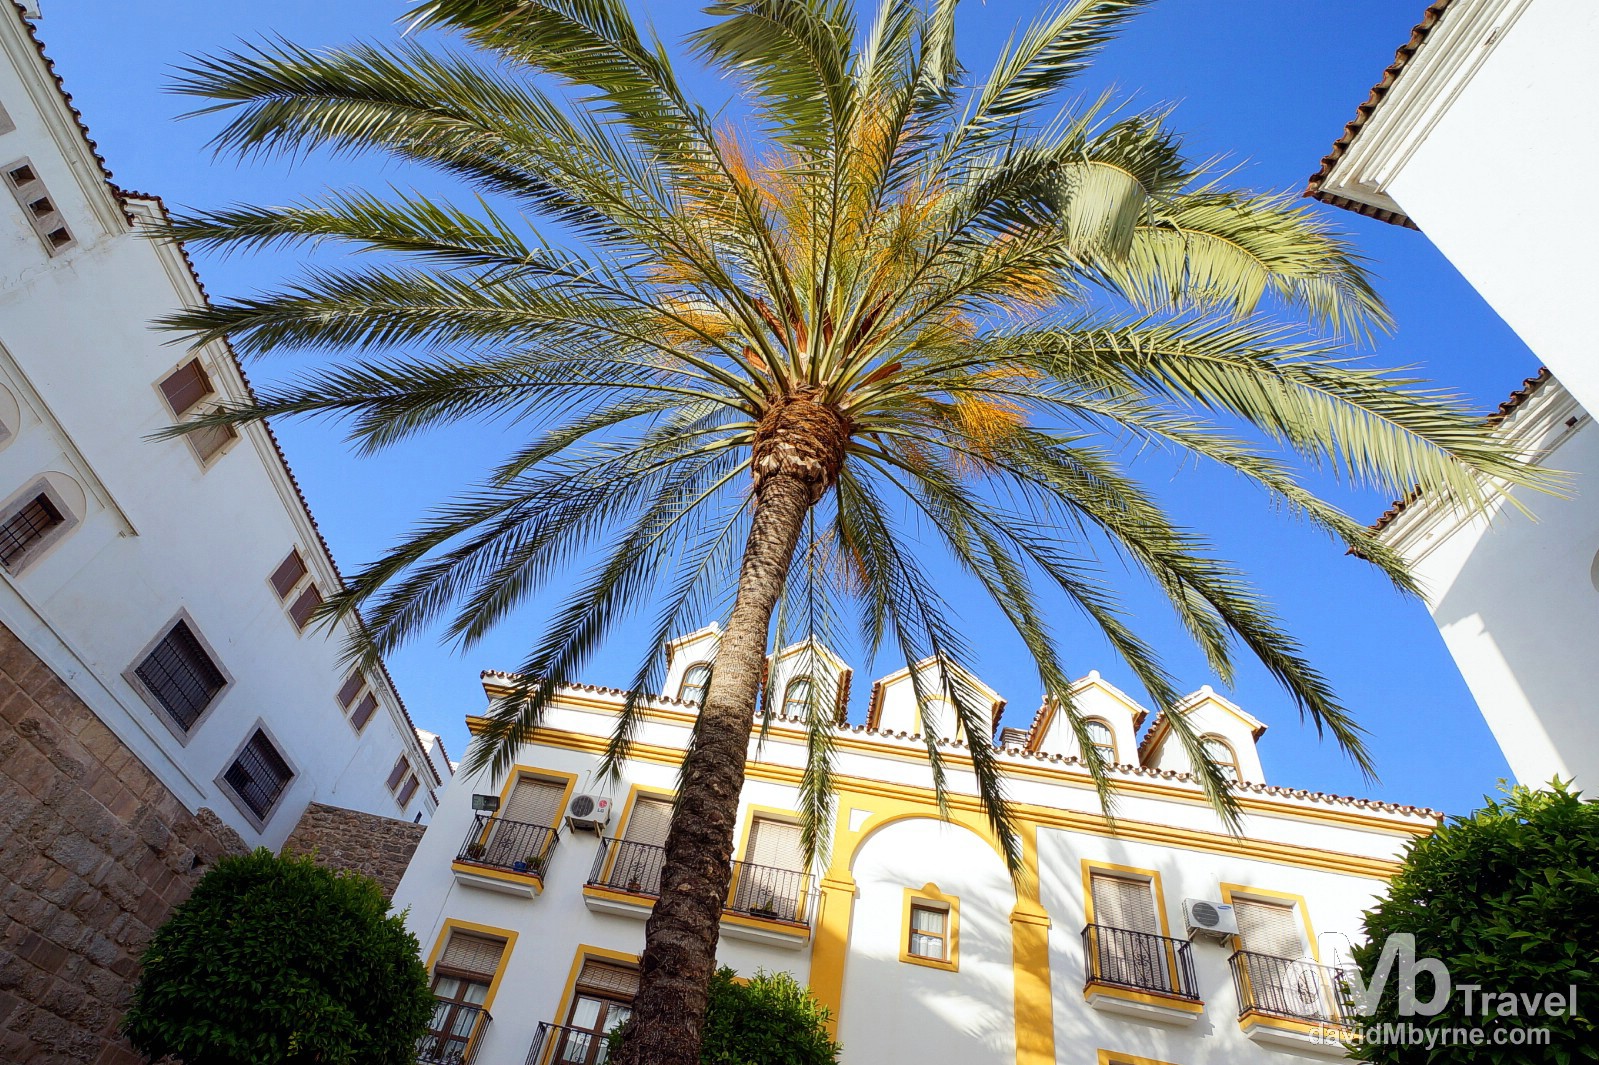 A palm tree in Plaza de los Naranjos, Marbella, Andalusia, Spain. June 6th, 2014.